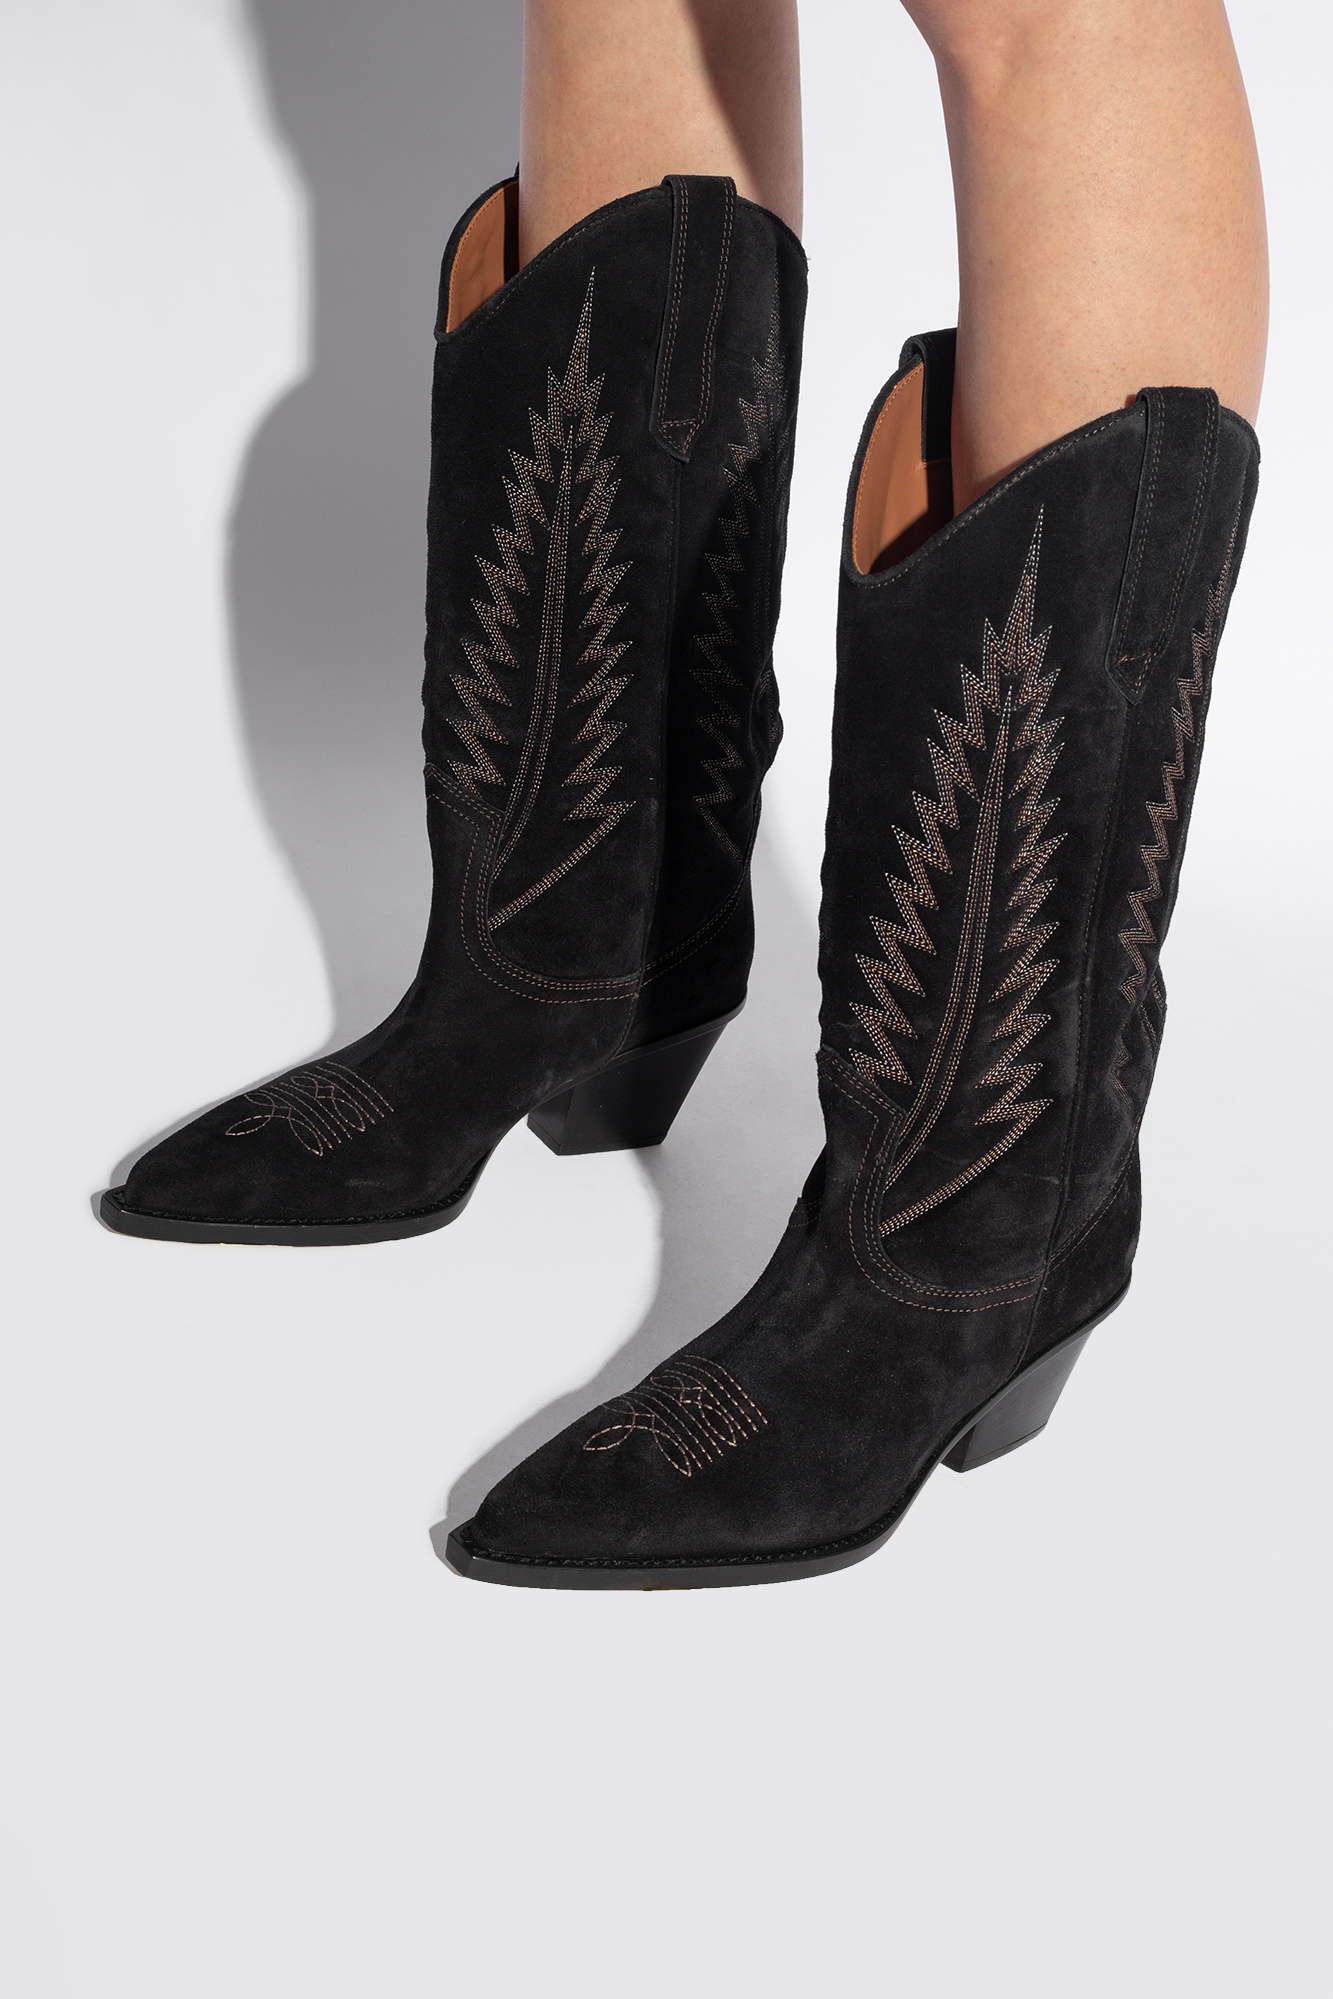 Paris Texas ‘Rosario’ heeled cowboy boots